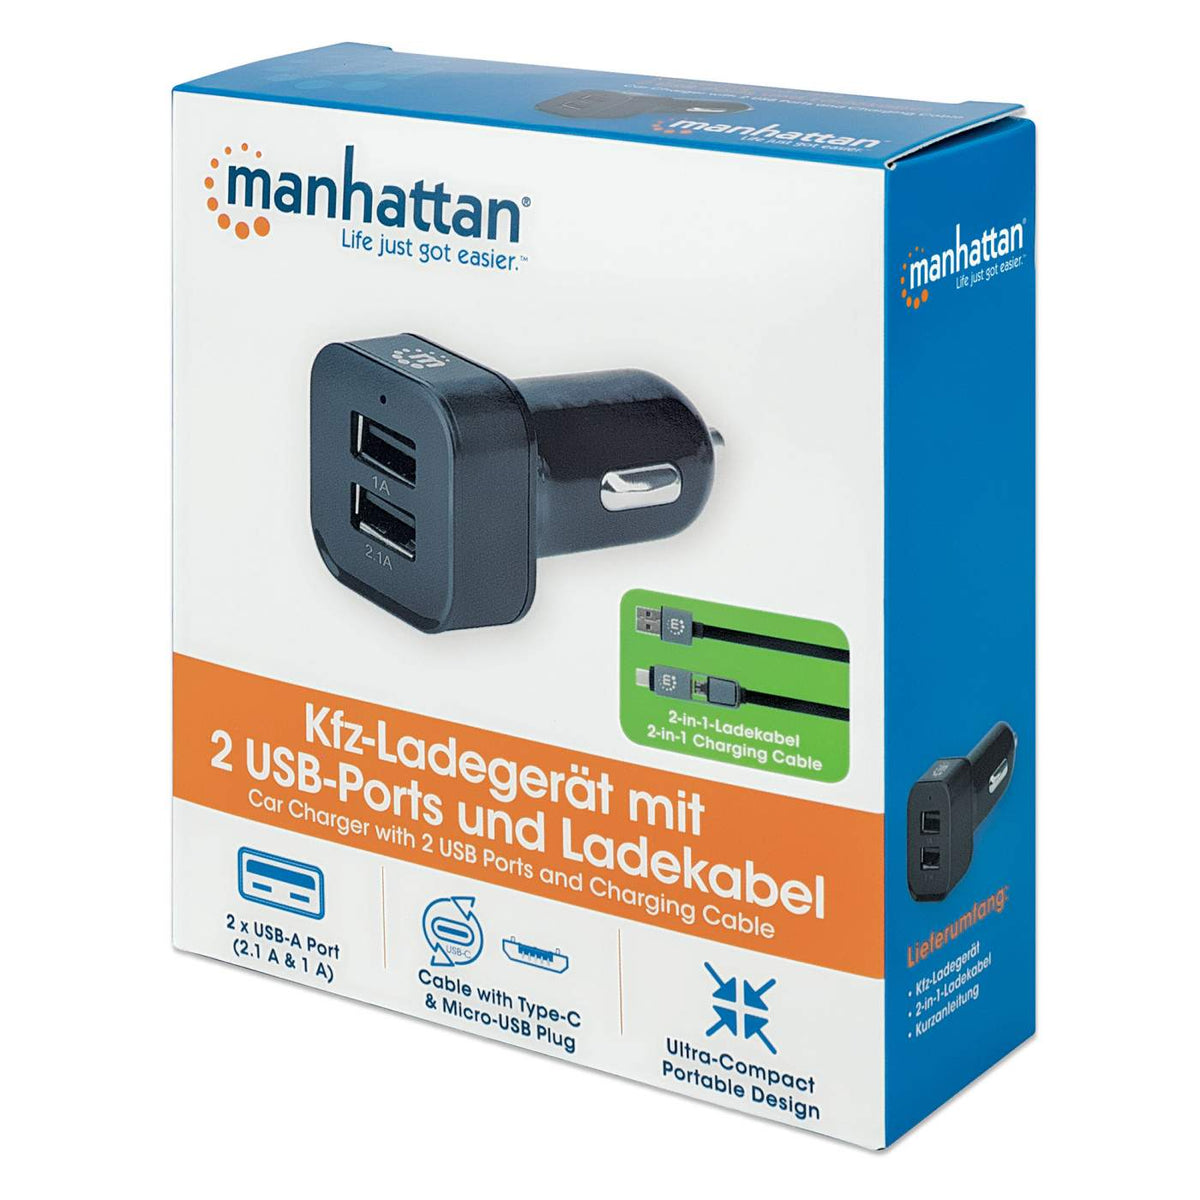 Manhattan Station de recharge USB (76 W, Charge rapide) - Galaxus